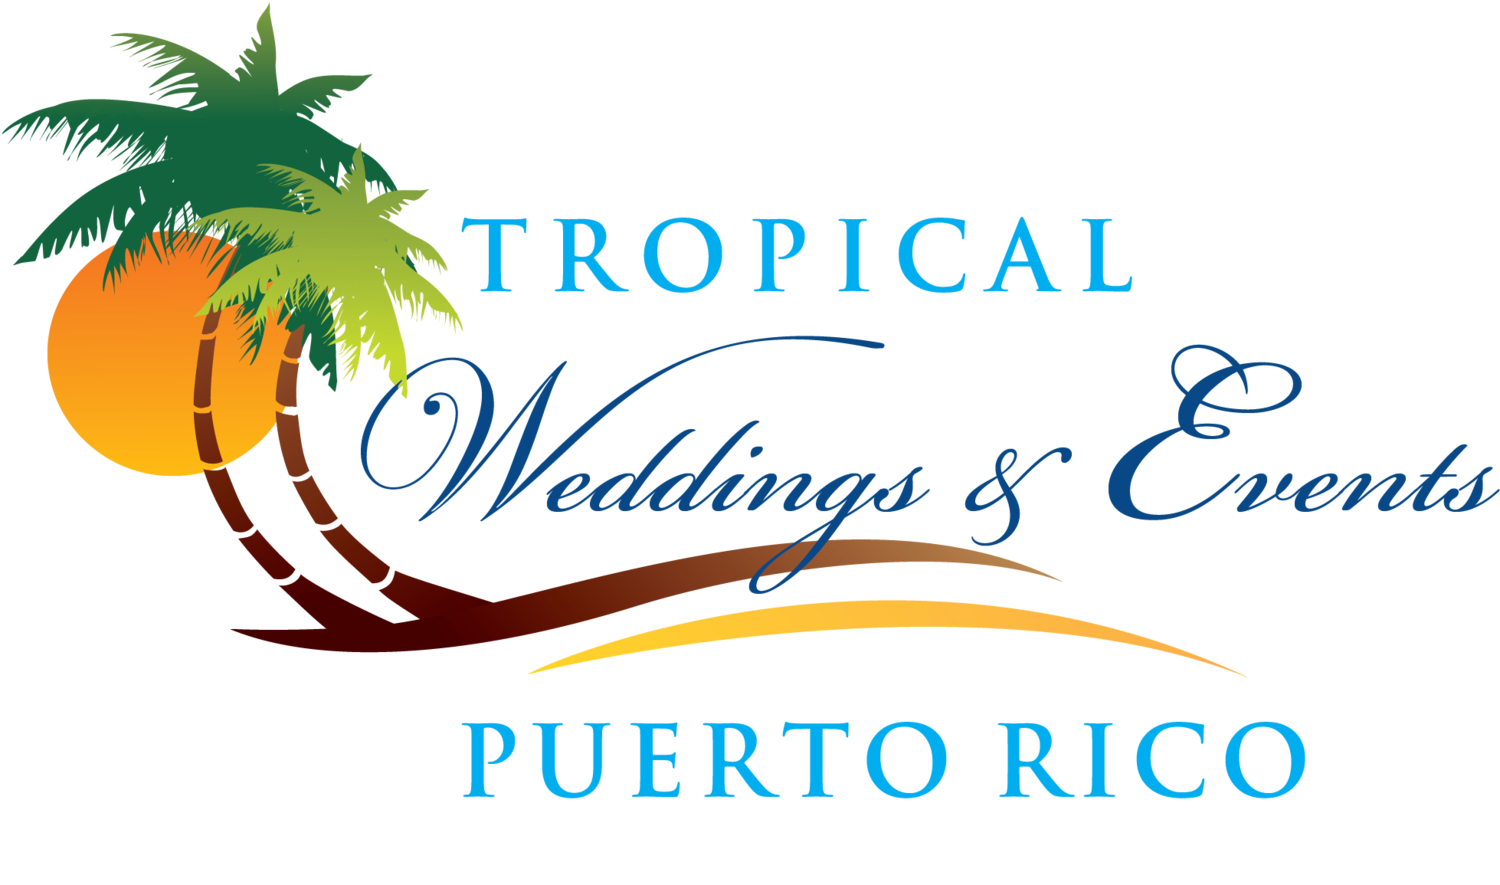 Tropical Weddings & Events Puerto Rico